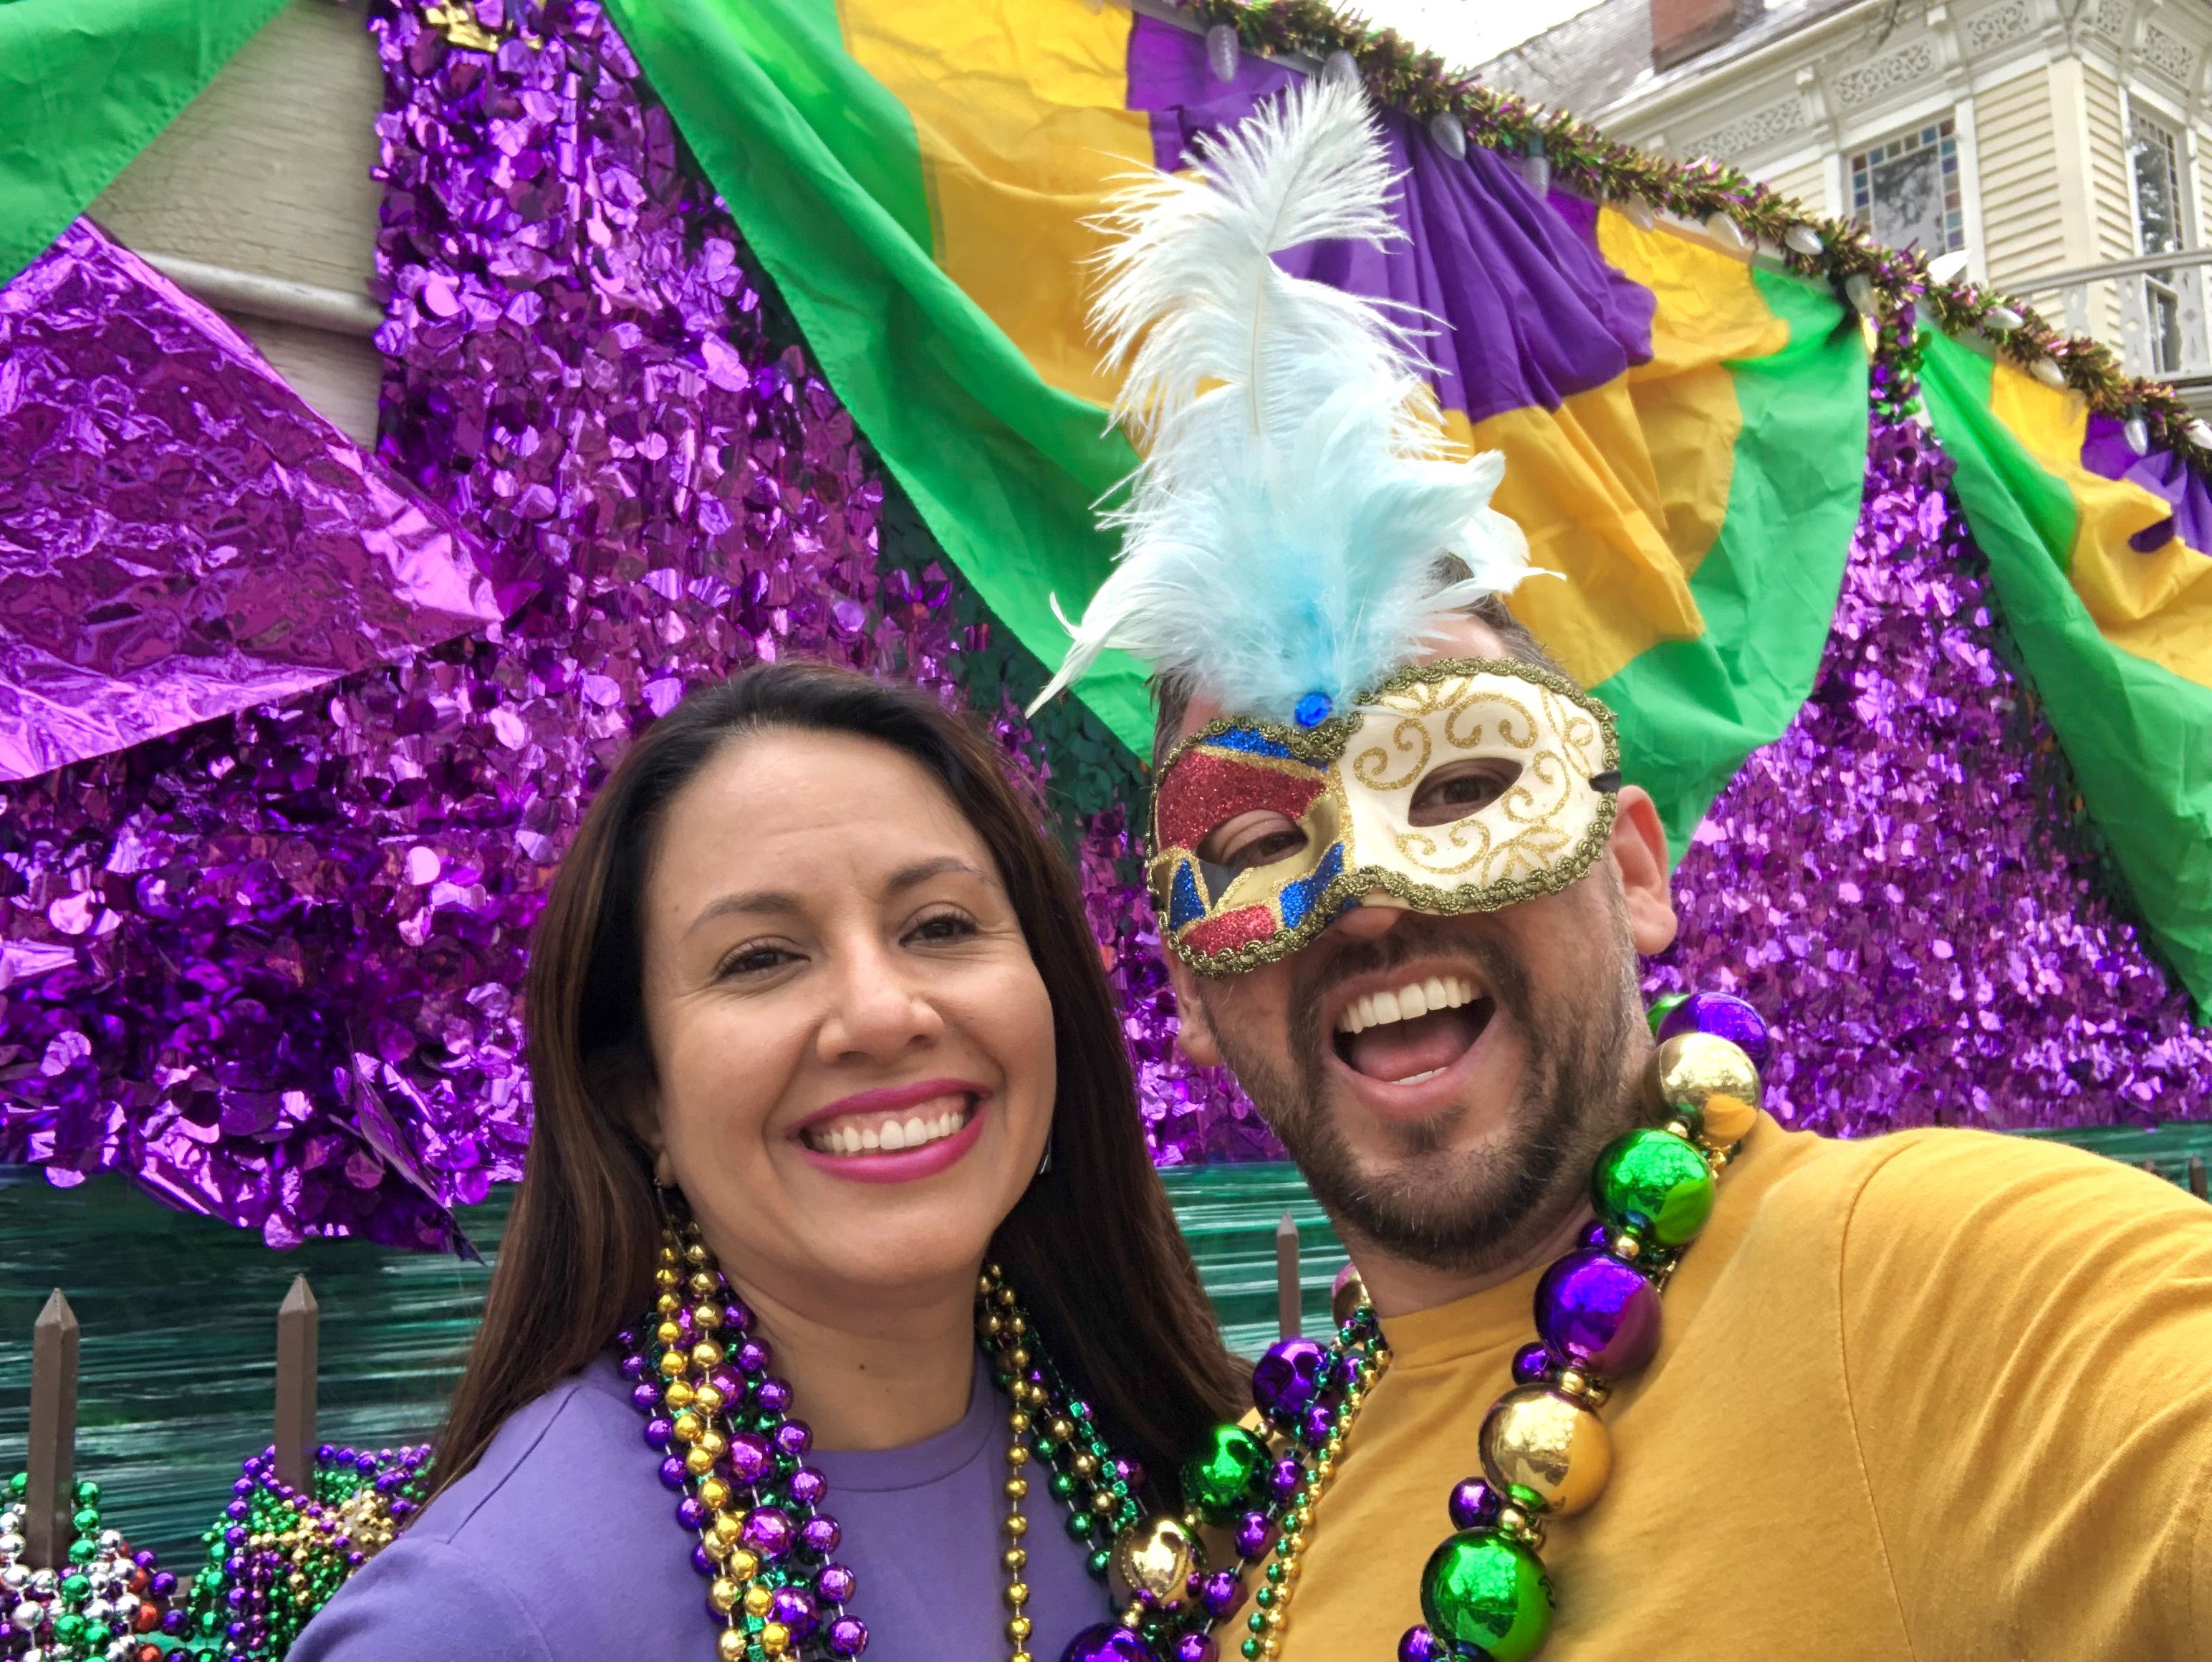 What to Wear to Mardi Gras: Festive Mardi Gras Outfits Ideas